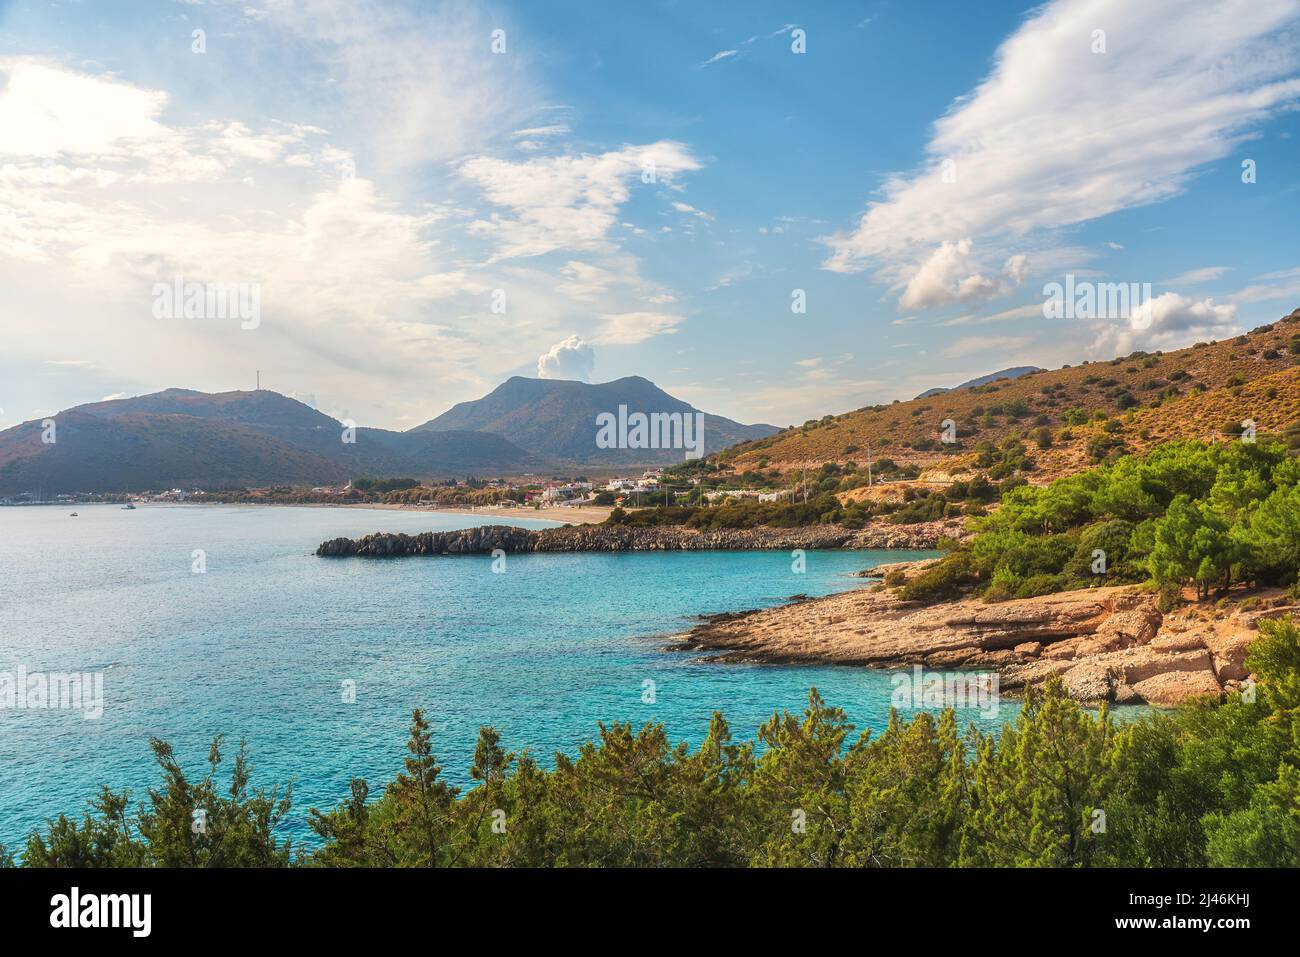 Palamutbuku beach in Datca Peninsula, Mugla region, Turkey on Aegean sea. Popular tourist summer vacations destination Stock Photo